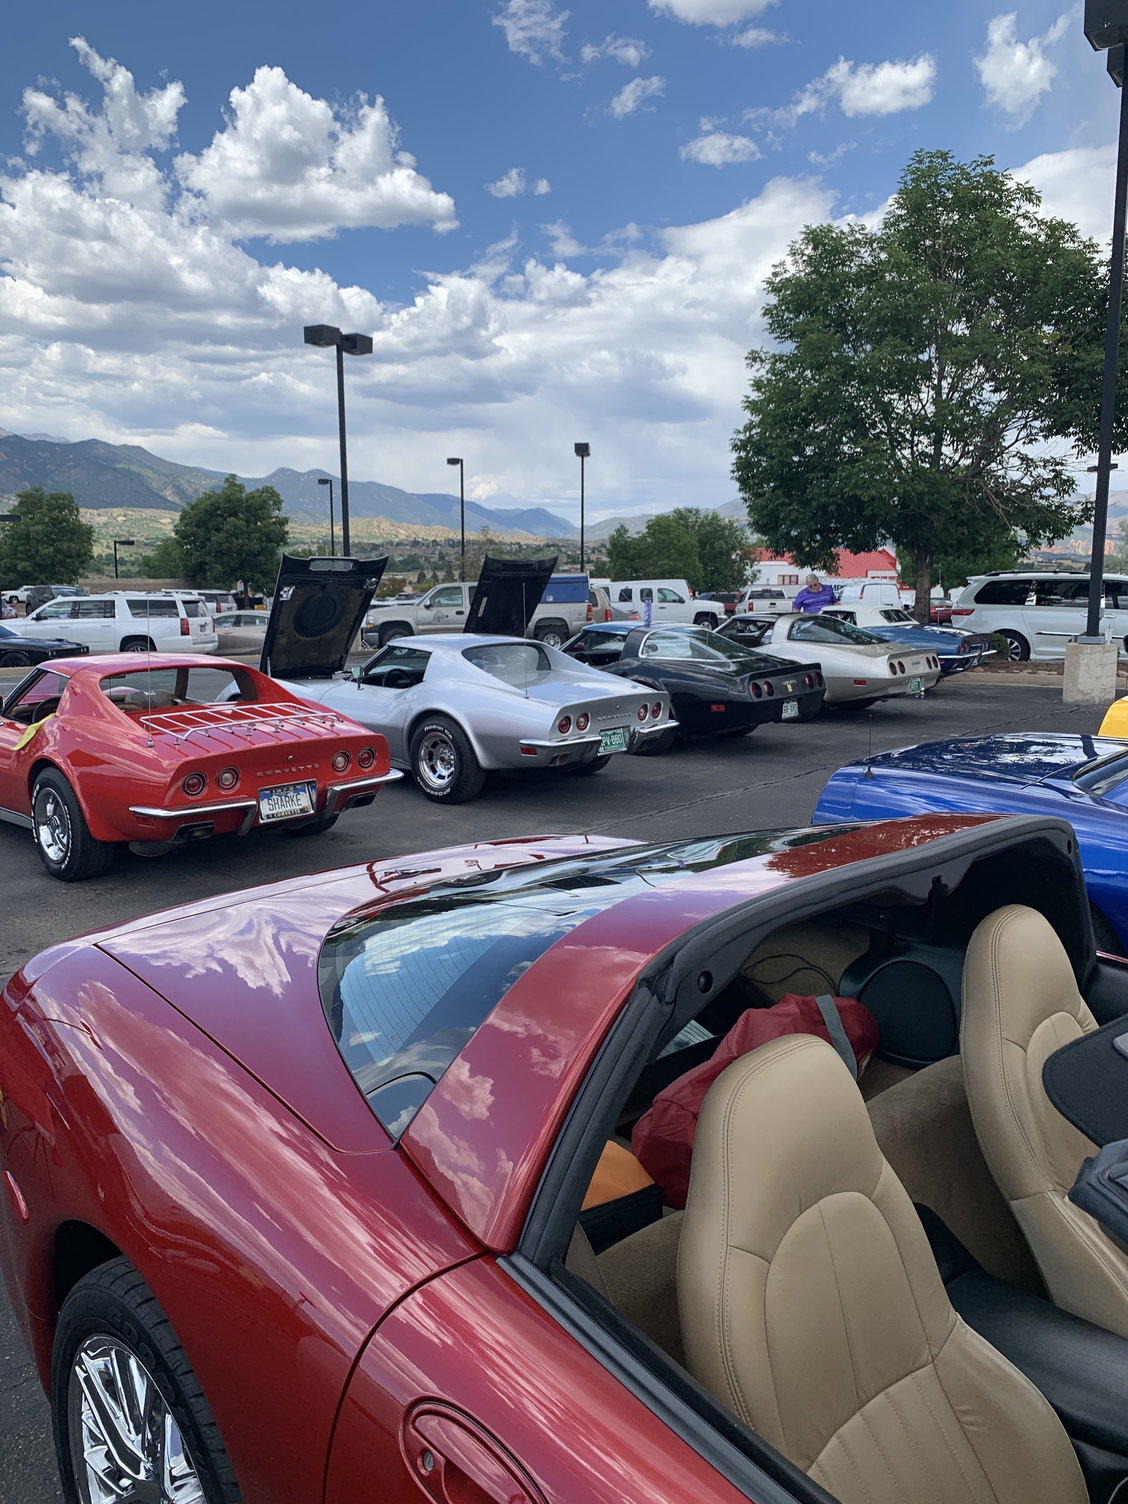 People’s choice Corvette car show in Colorado Springs CorvetteForum